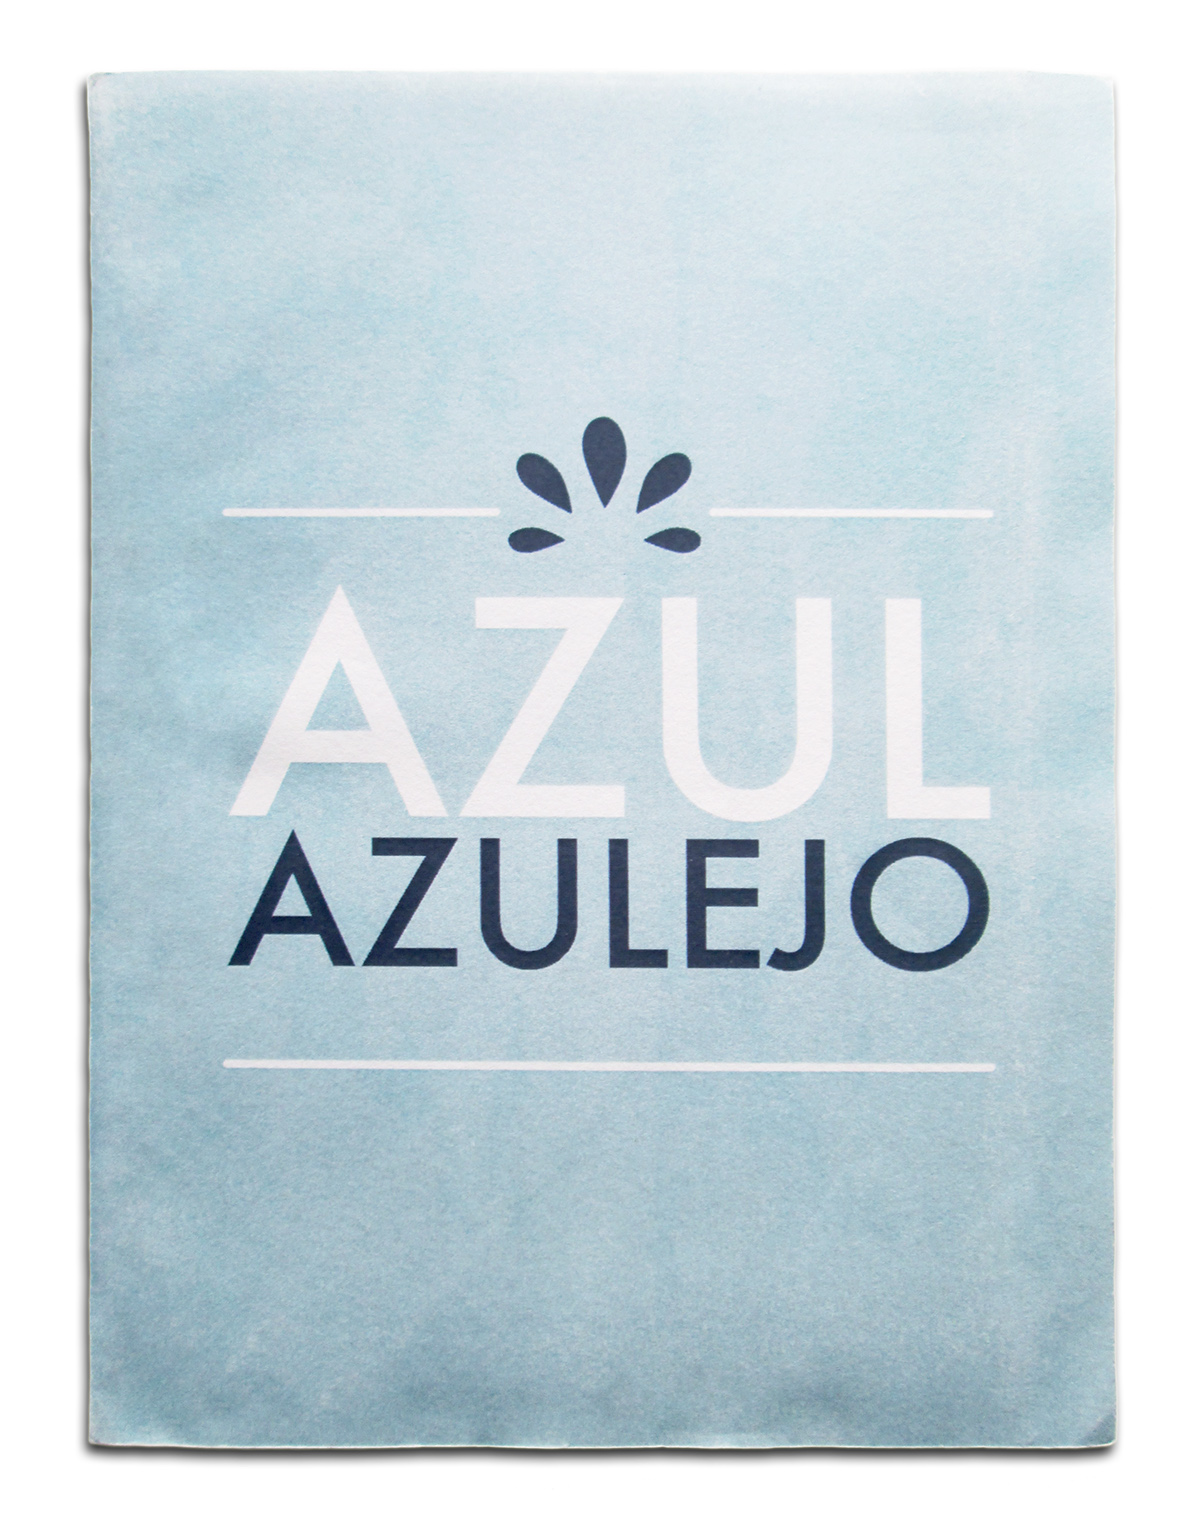 Portuguese Tile blue Portuguese Culture sticker